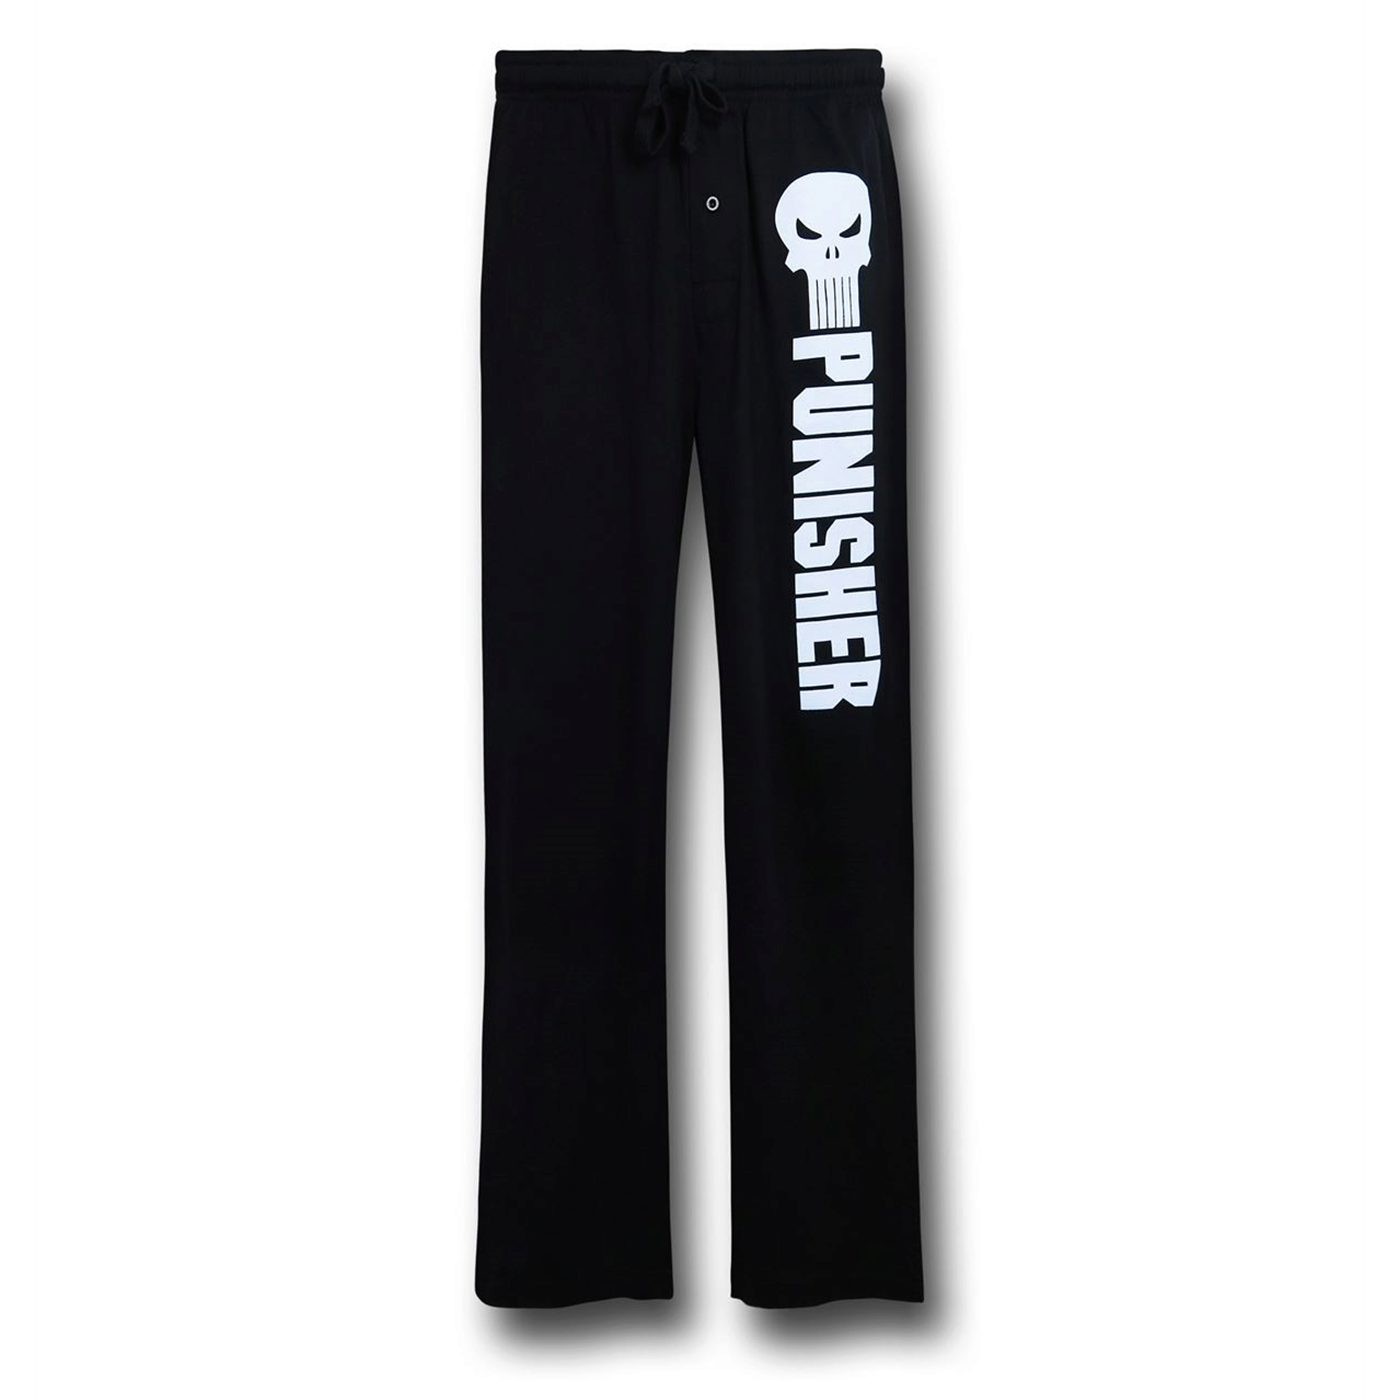 Punisher Symbol and Text Men's Pajama Pants